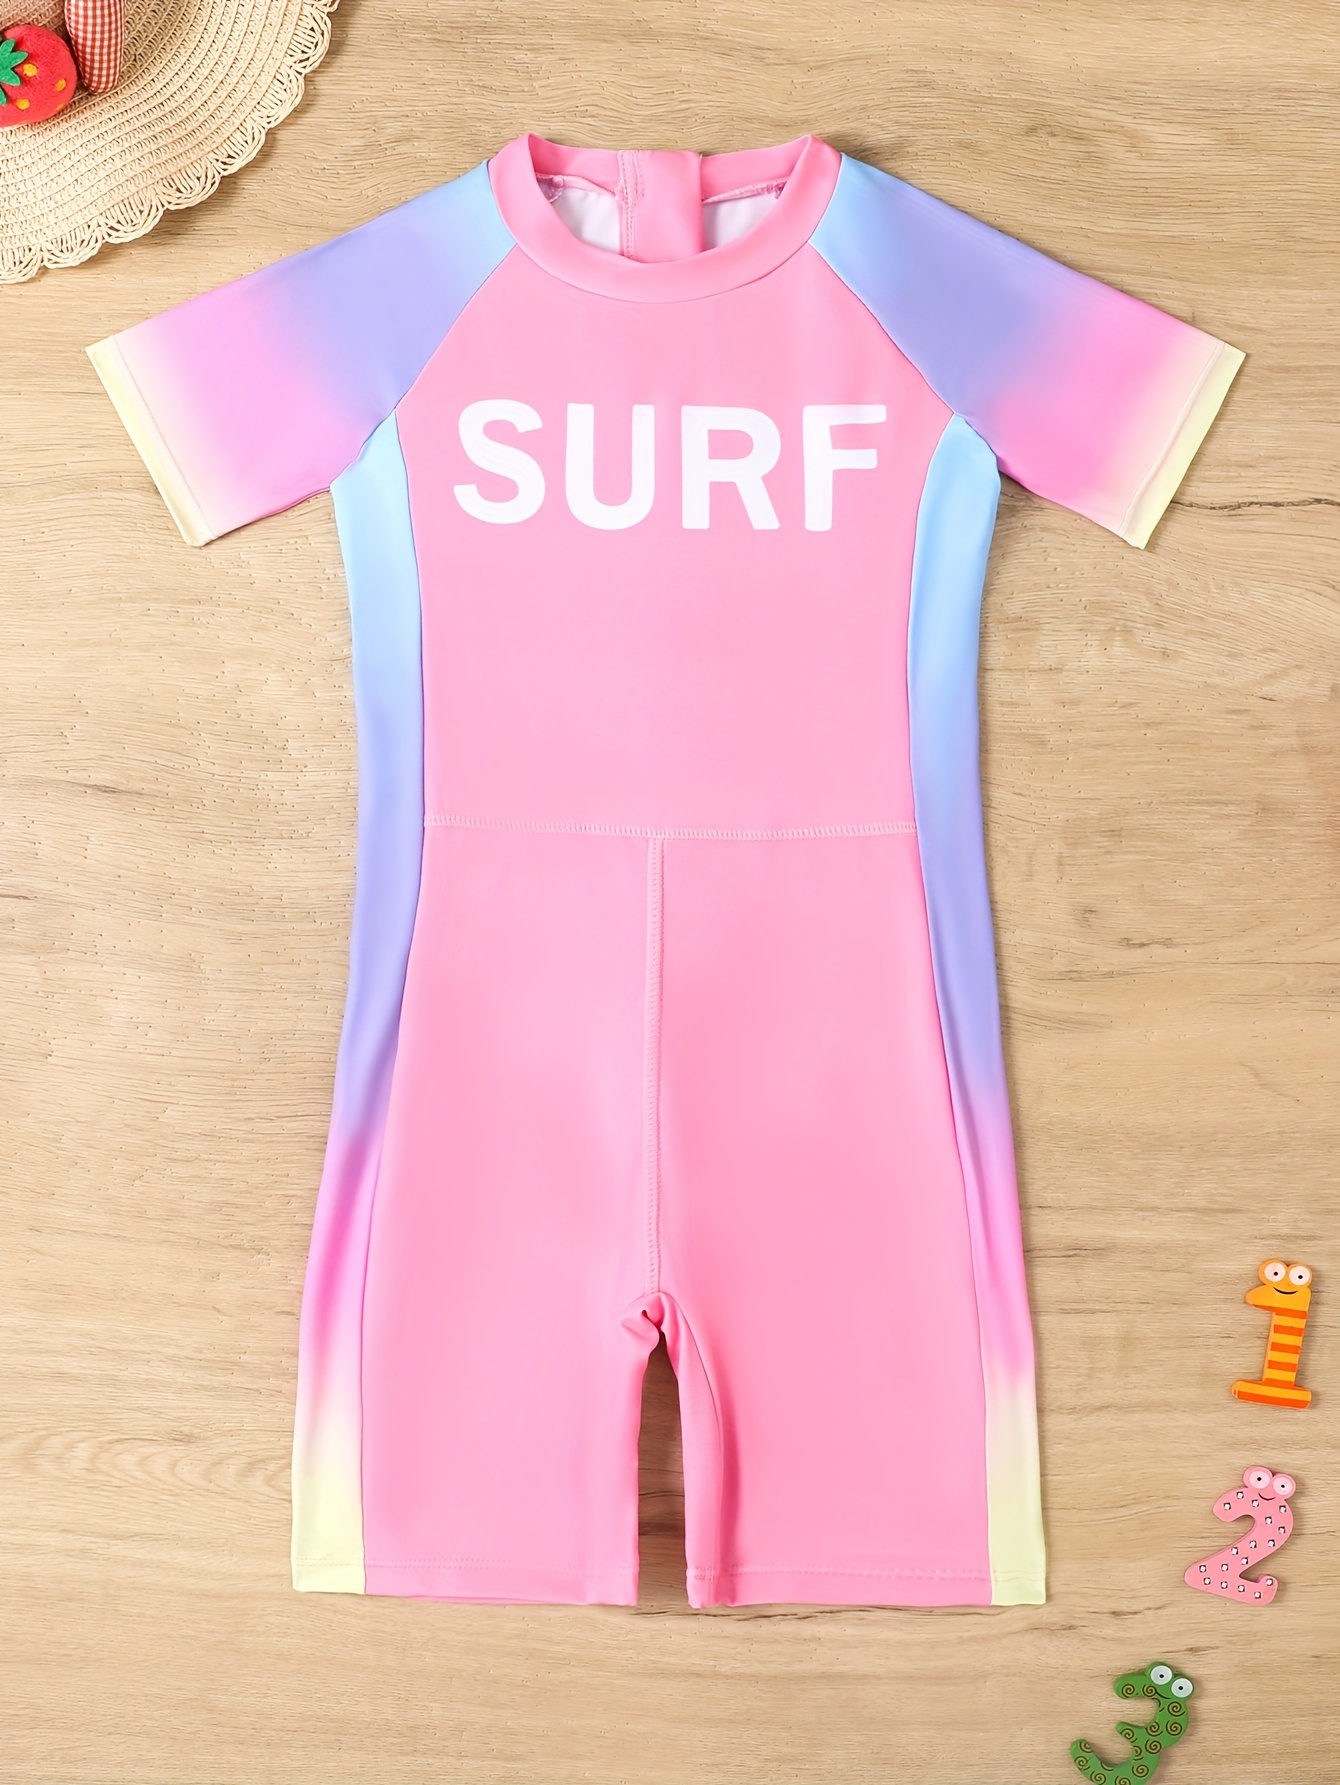 Summer One Piece Swimsuit Boys Girls Short Sleeve Bathing Suit